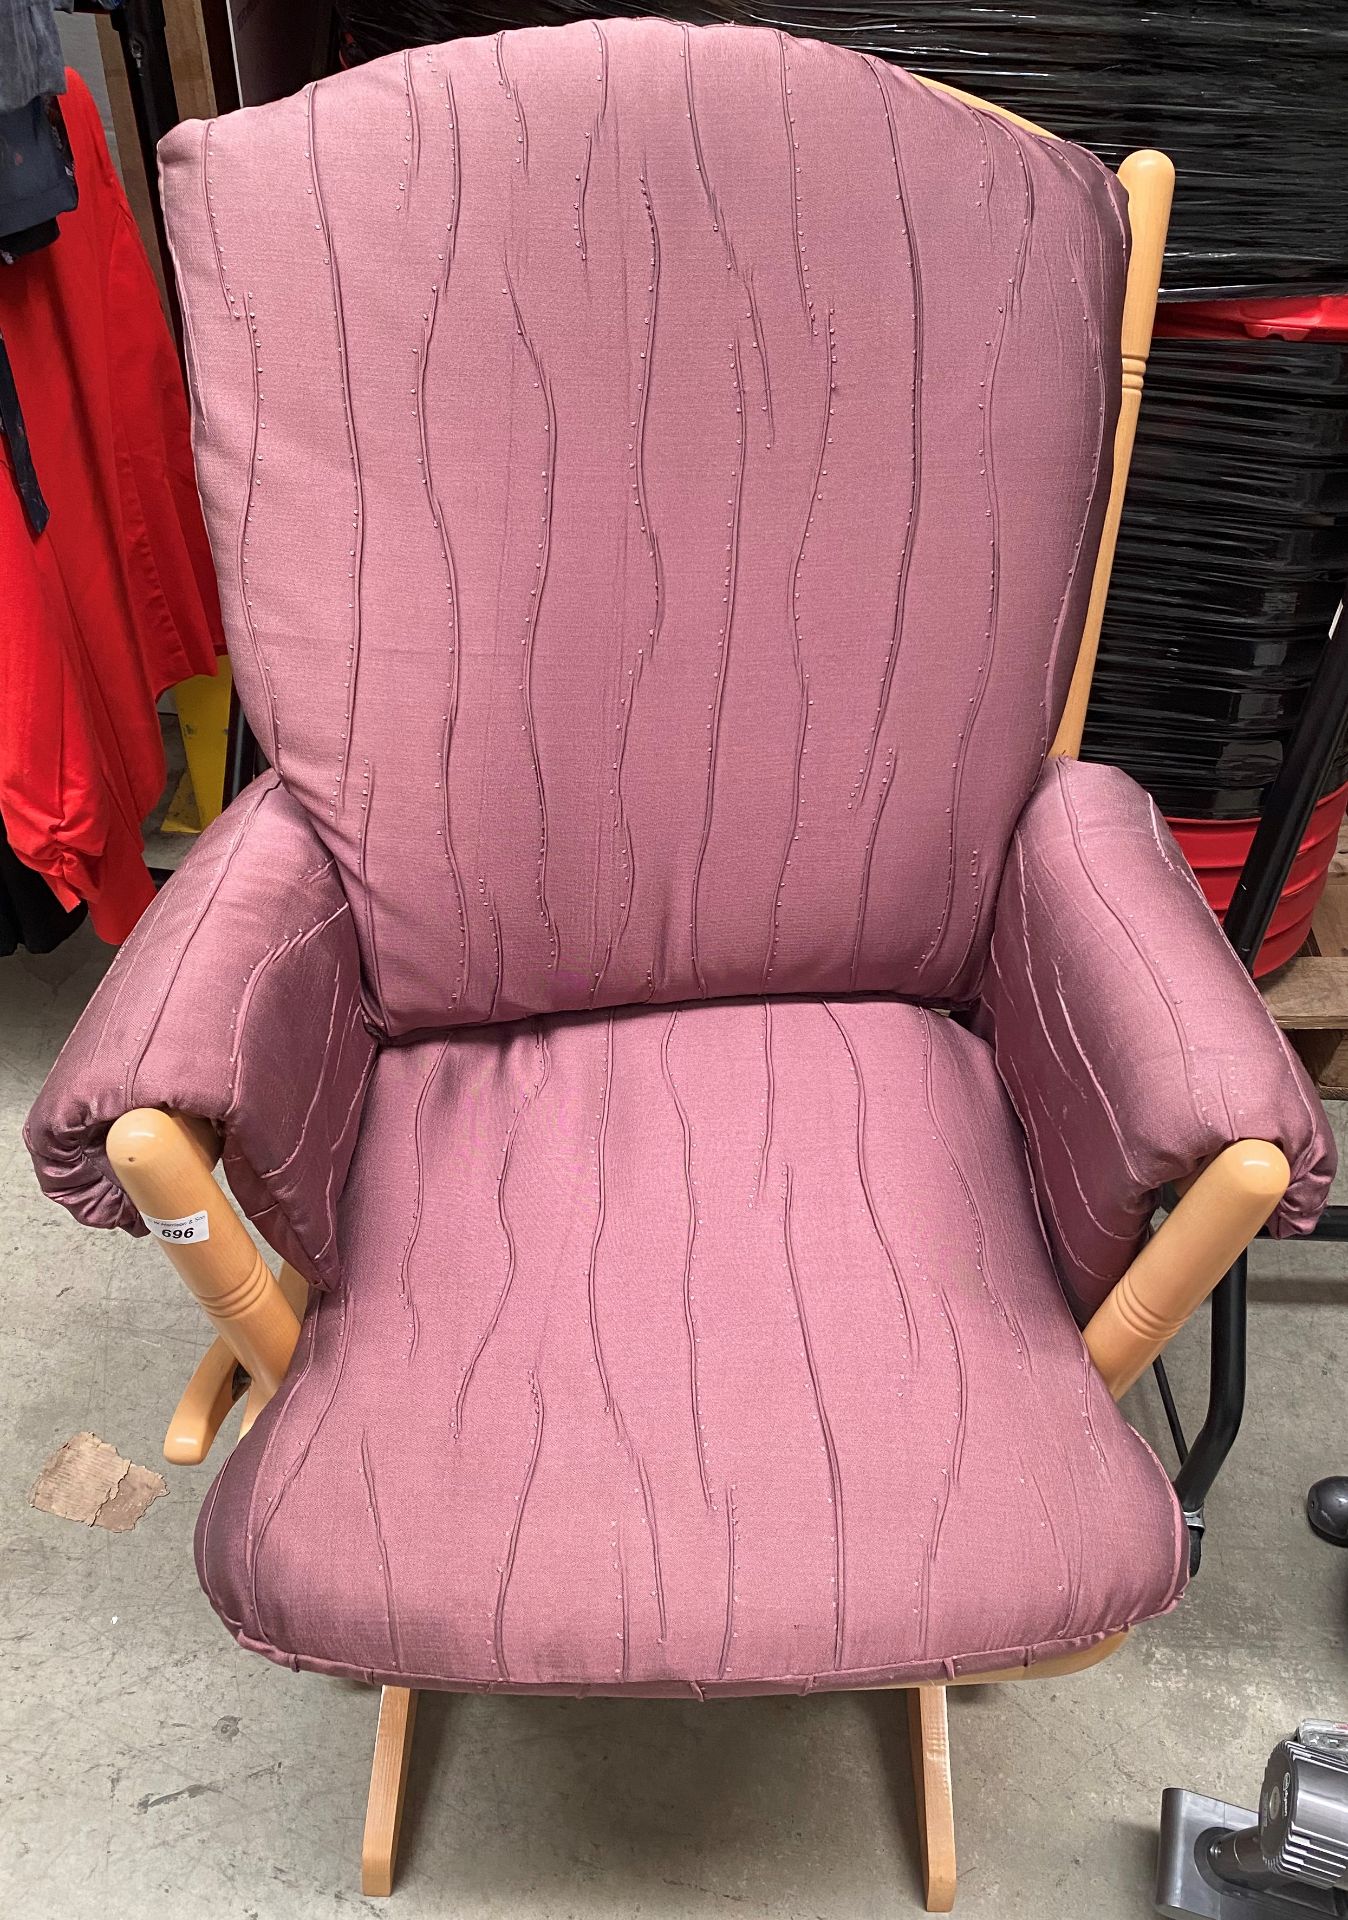 A Dutalier light wood framed rocker with dark pink upholstered seat and back